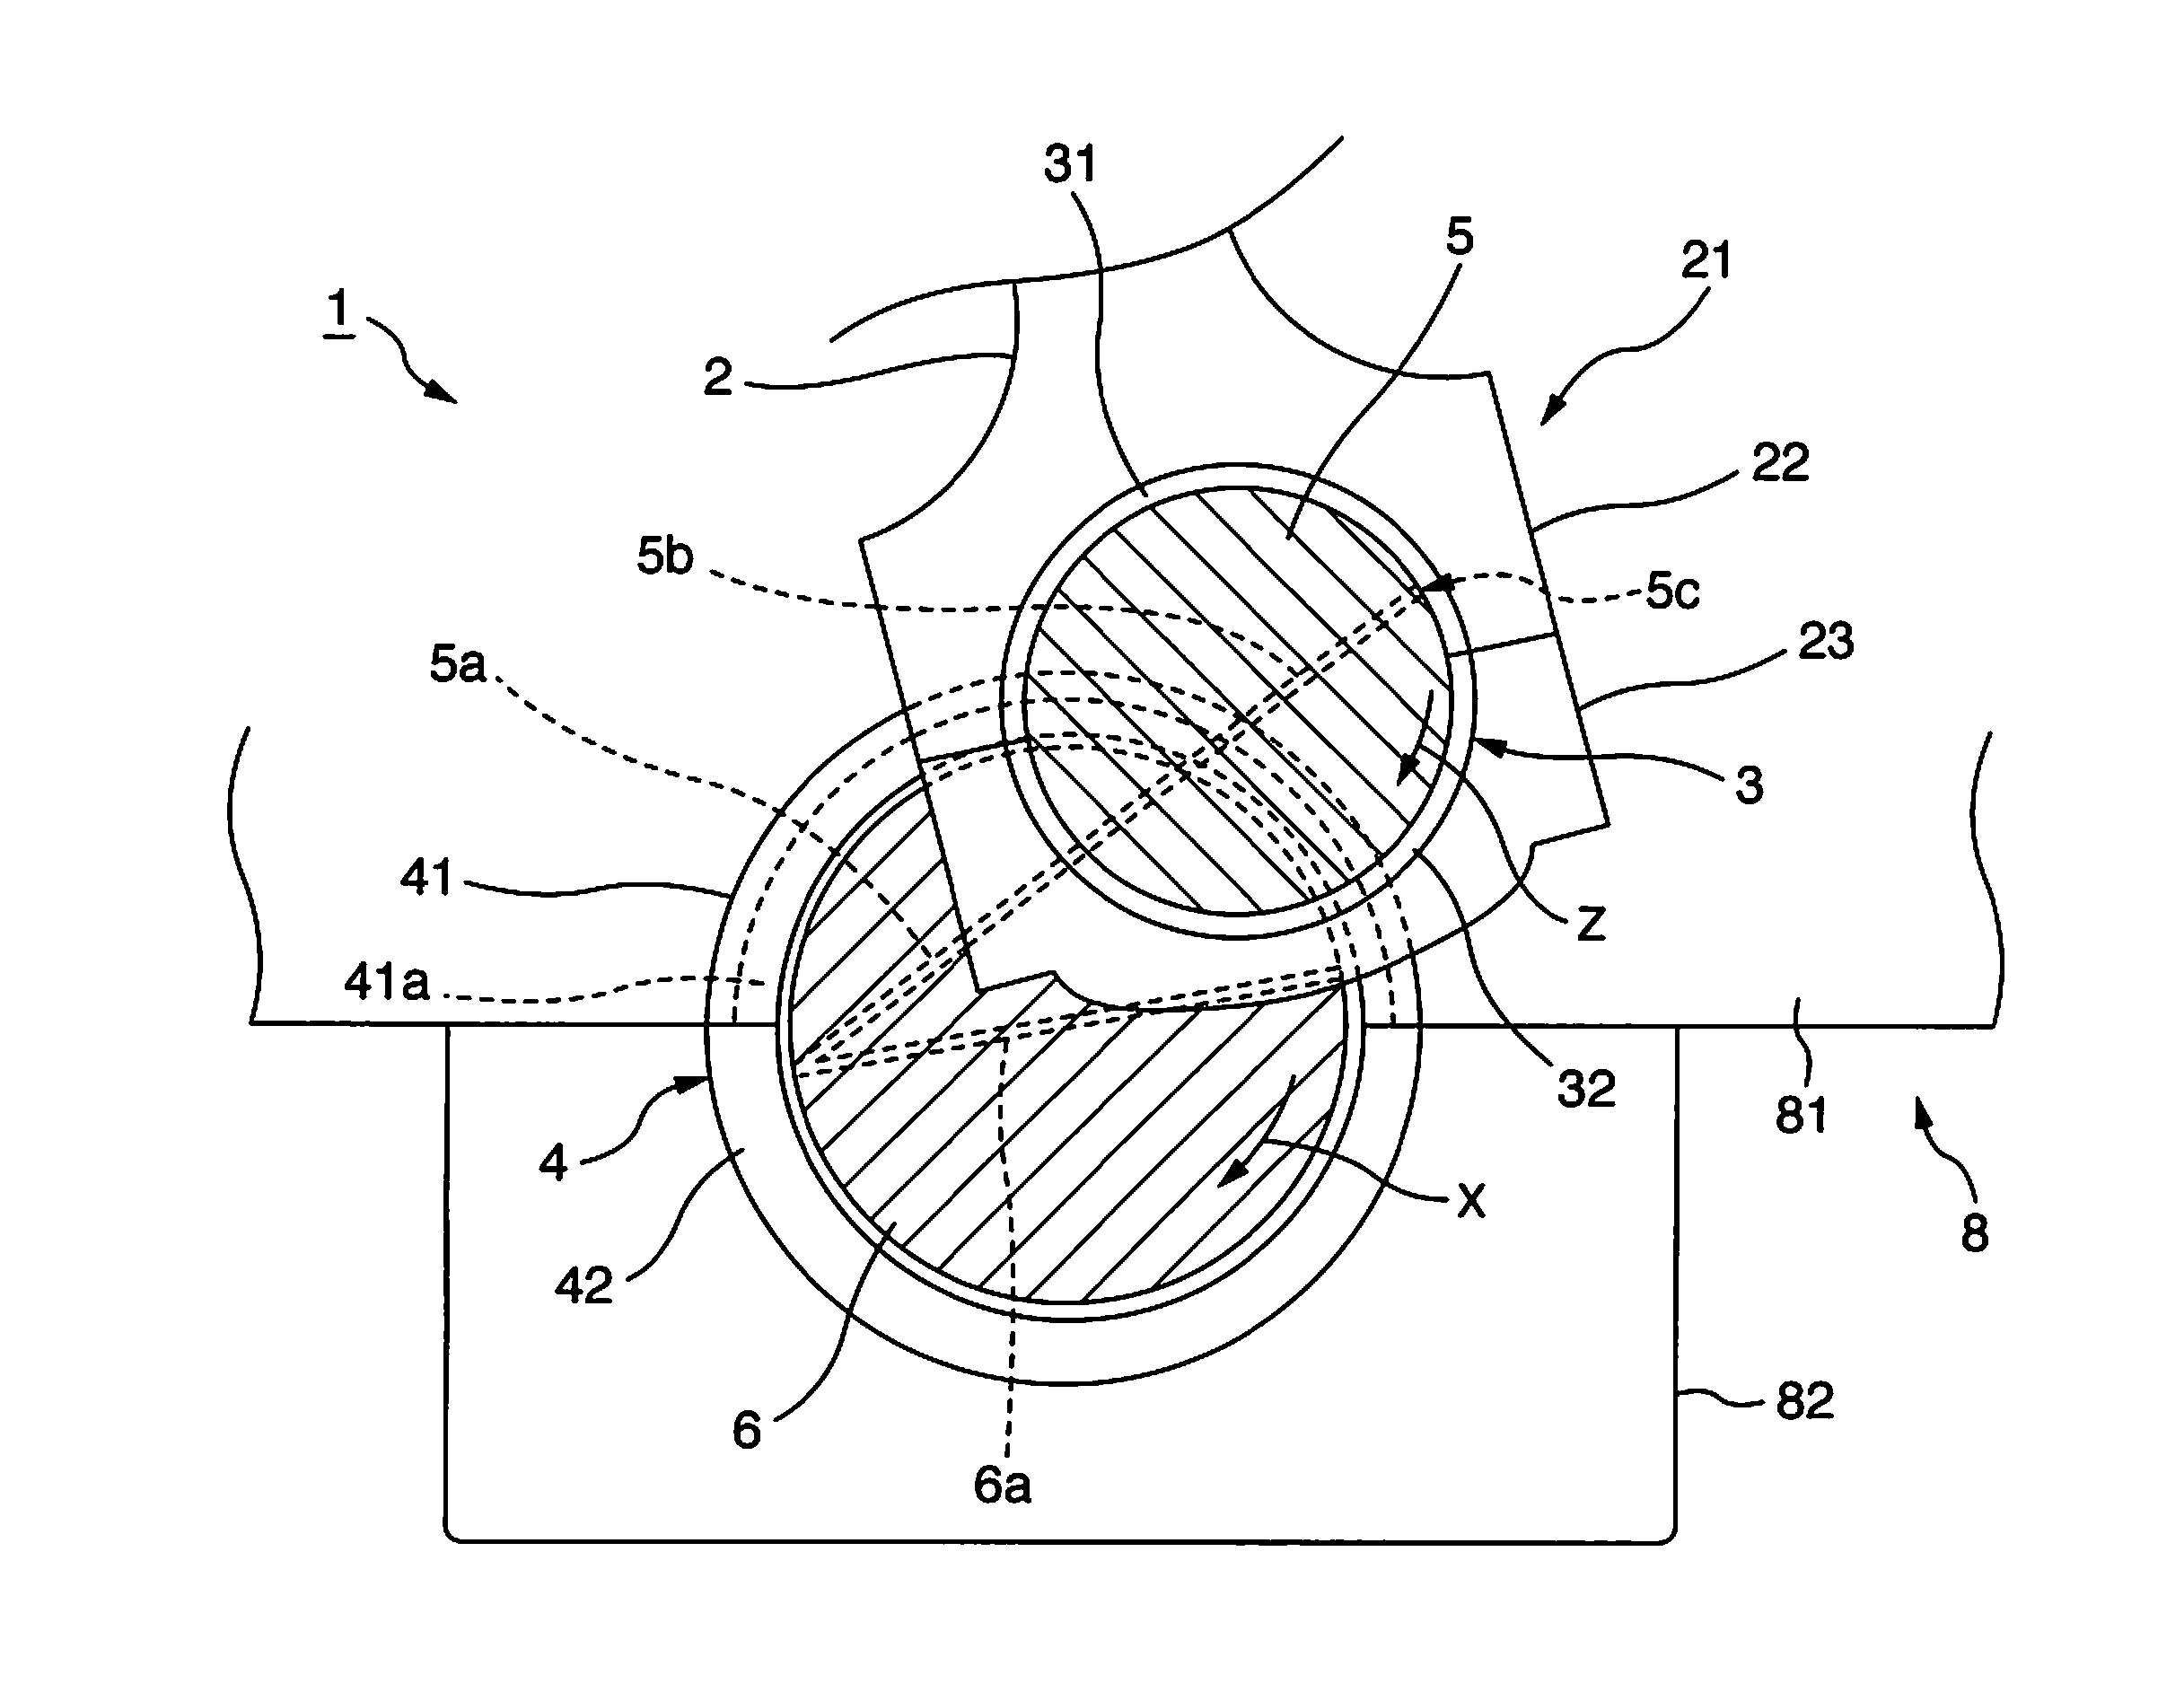 Main bearing for crankshaft of internal combustion engine